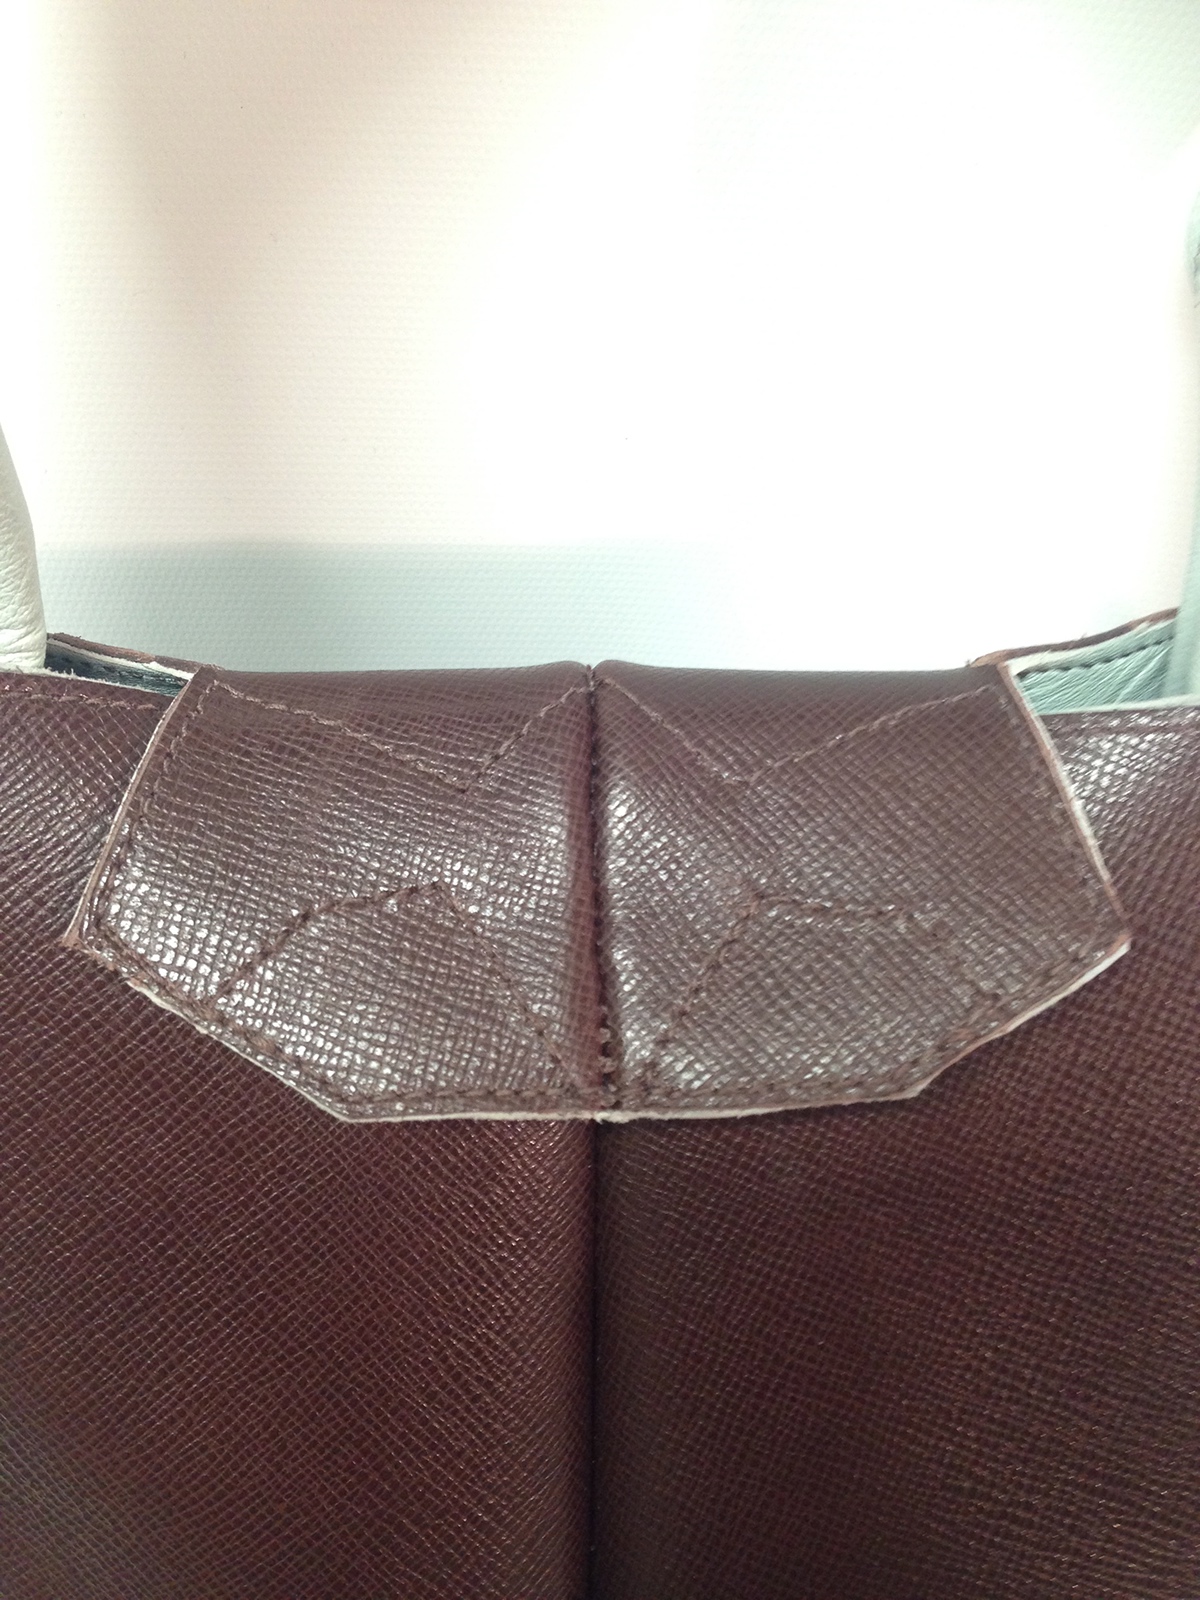 handbag bag purse leather handmade accessories accessorydesign design Geometrical Rigid lambskin saffiano